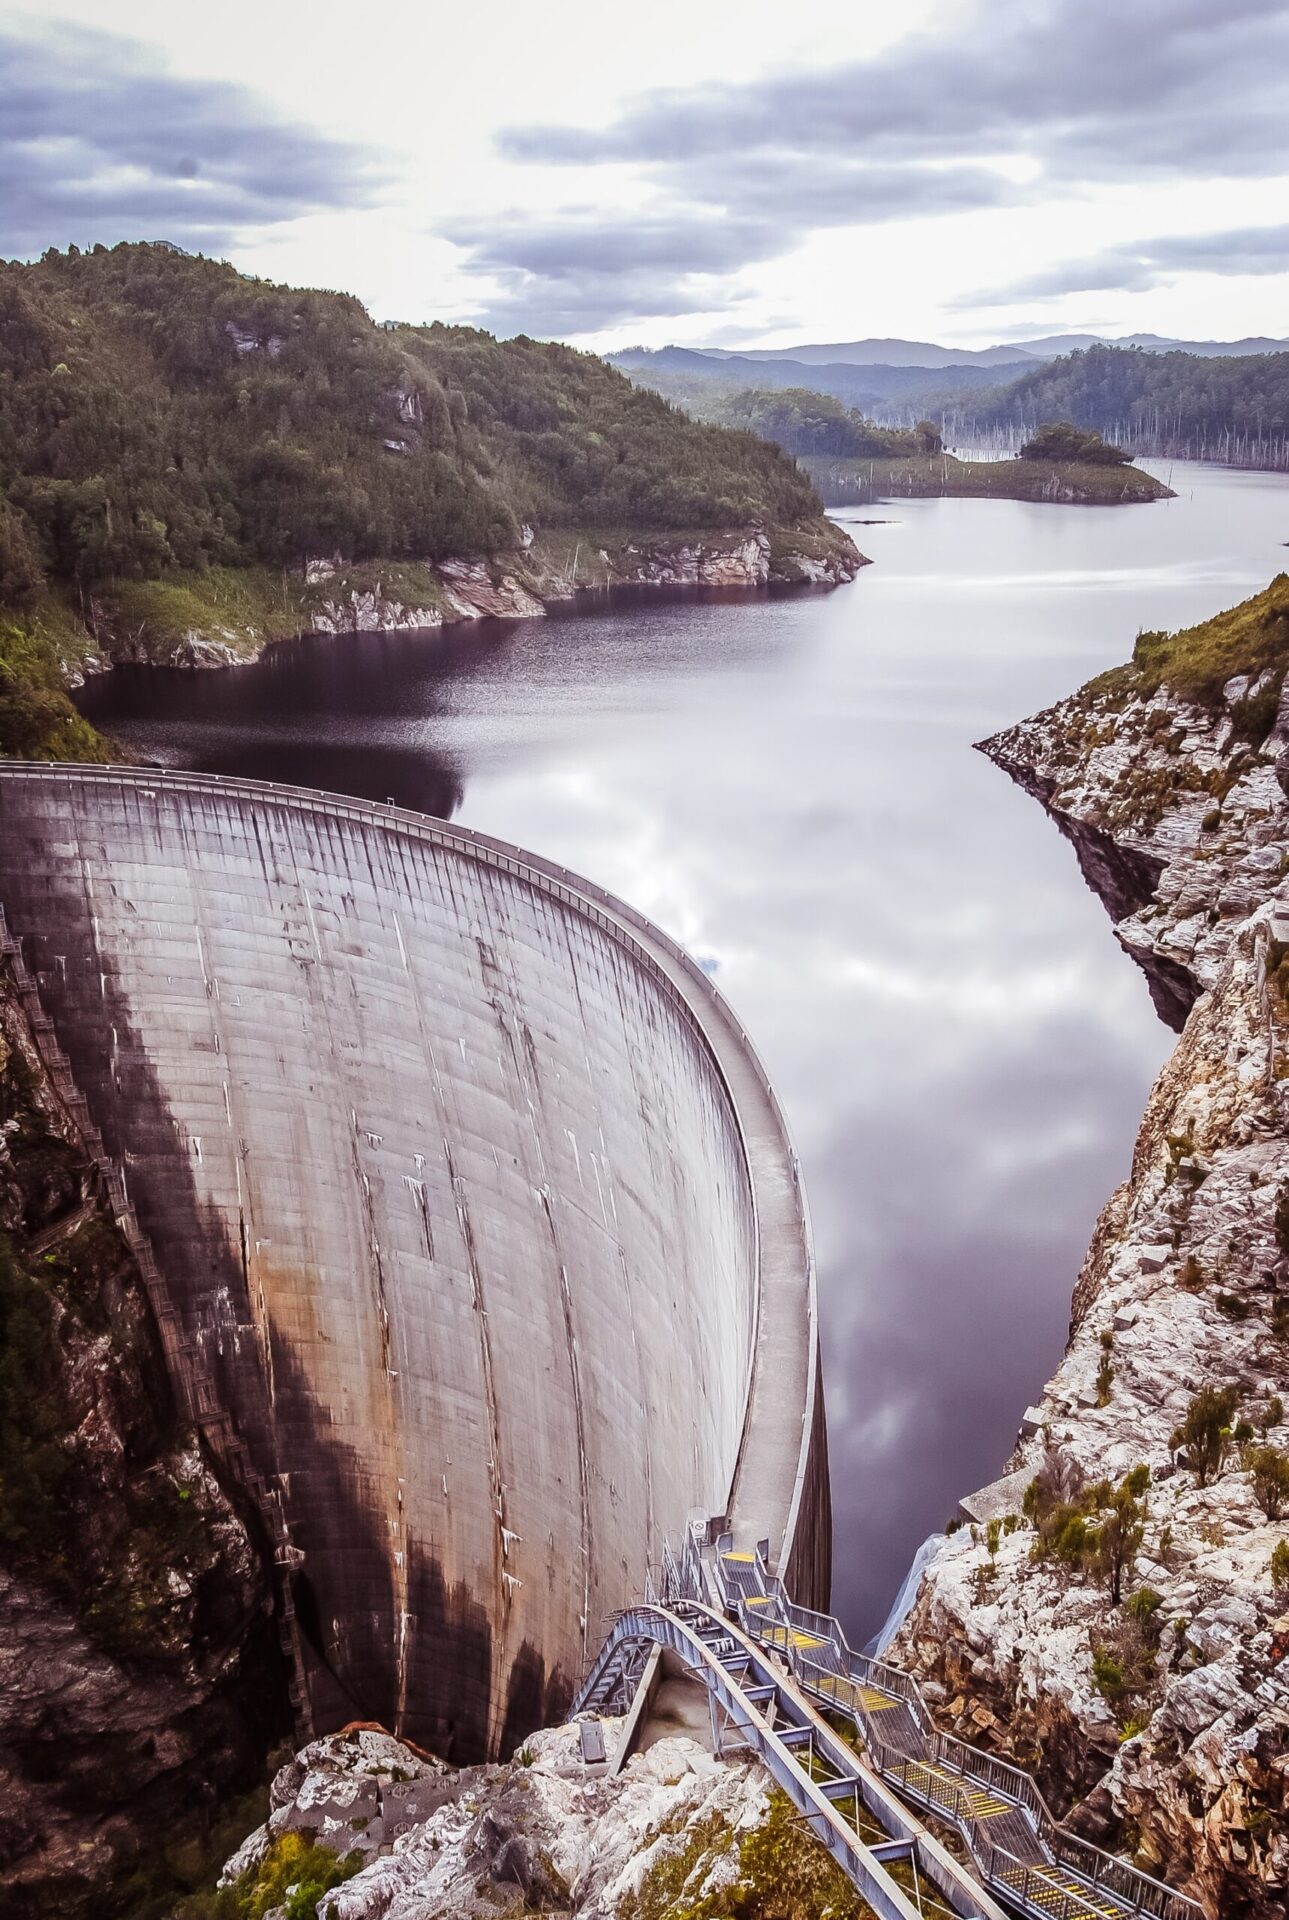 a steep dam holding back a large reservoir